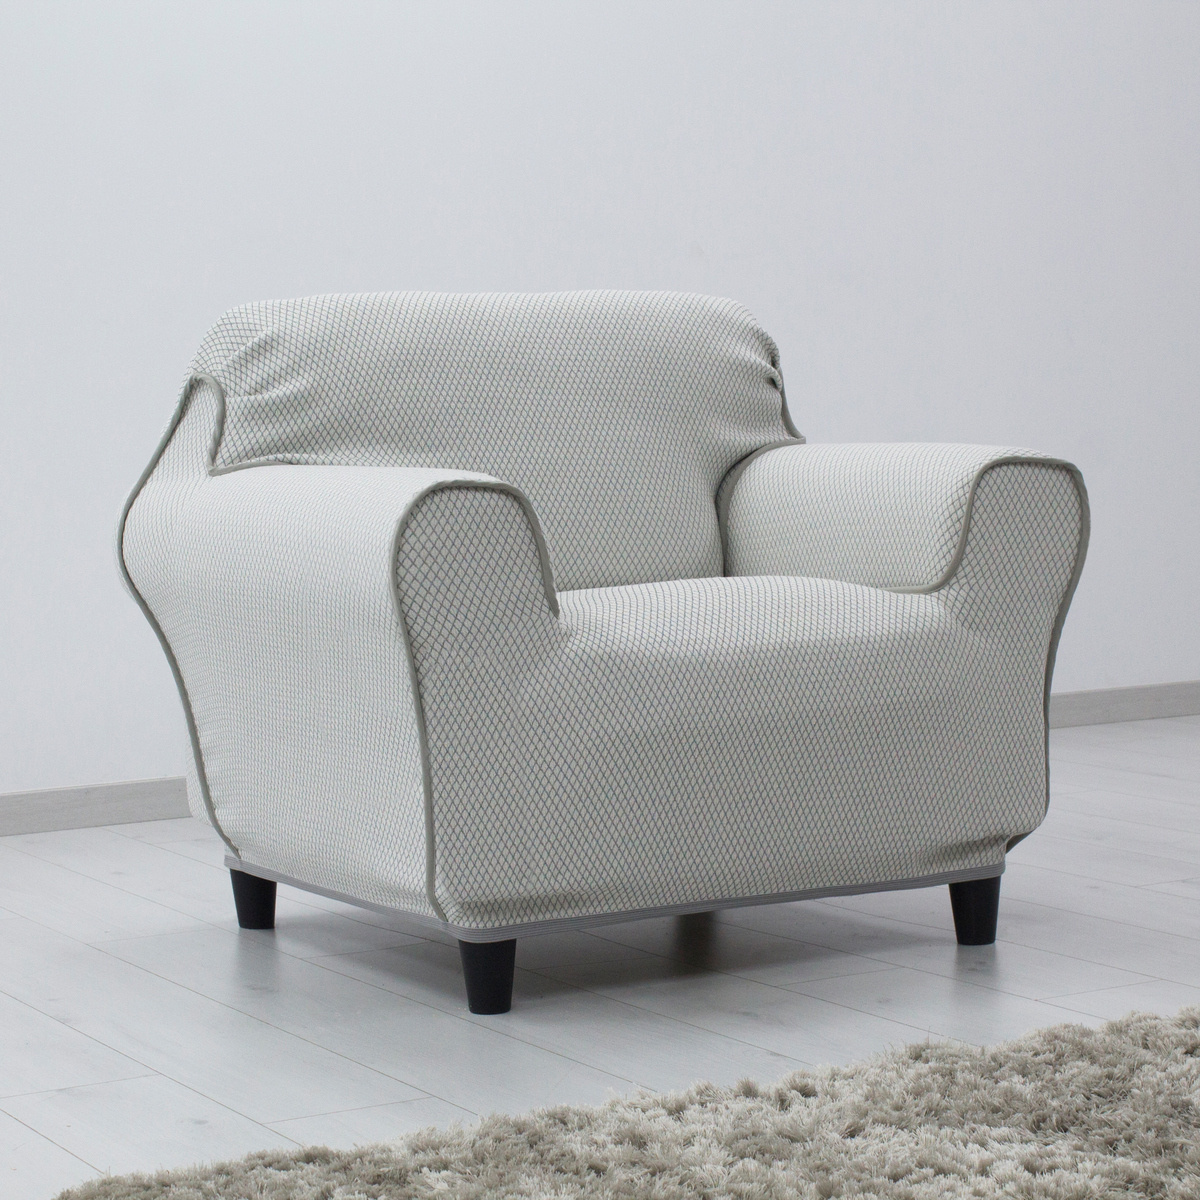 IRPIN multielasztikus fotelhuzat szürke, 70-110cm, 70 - 110 cm